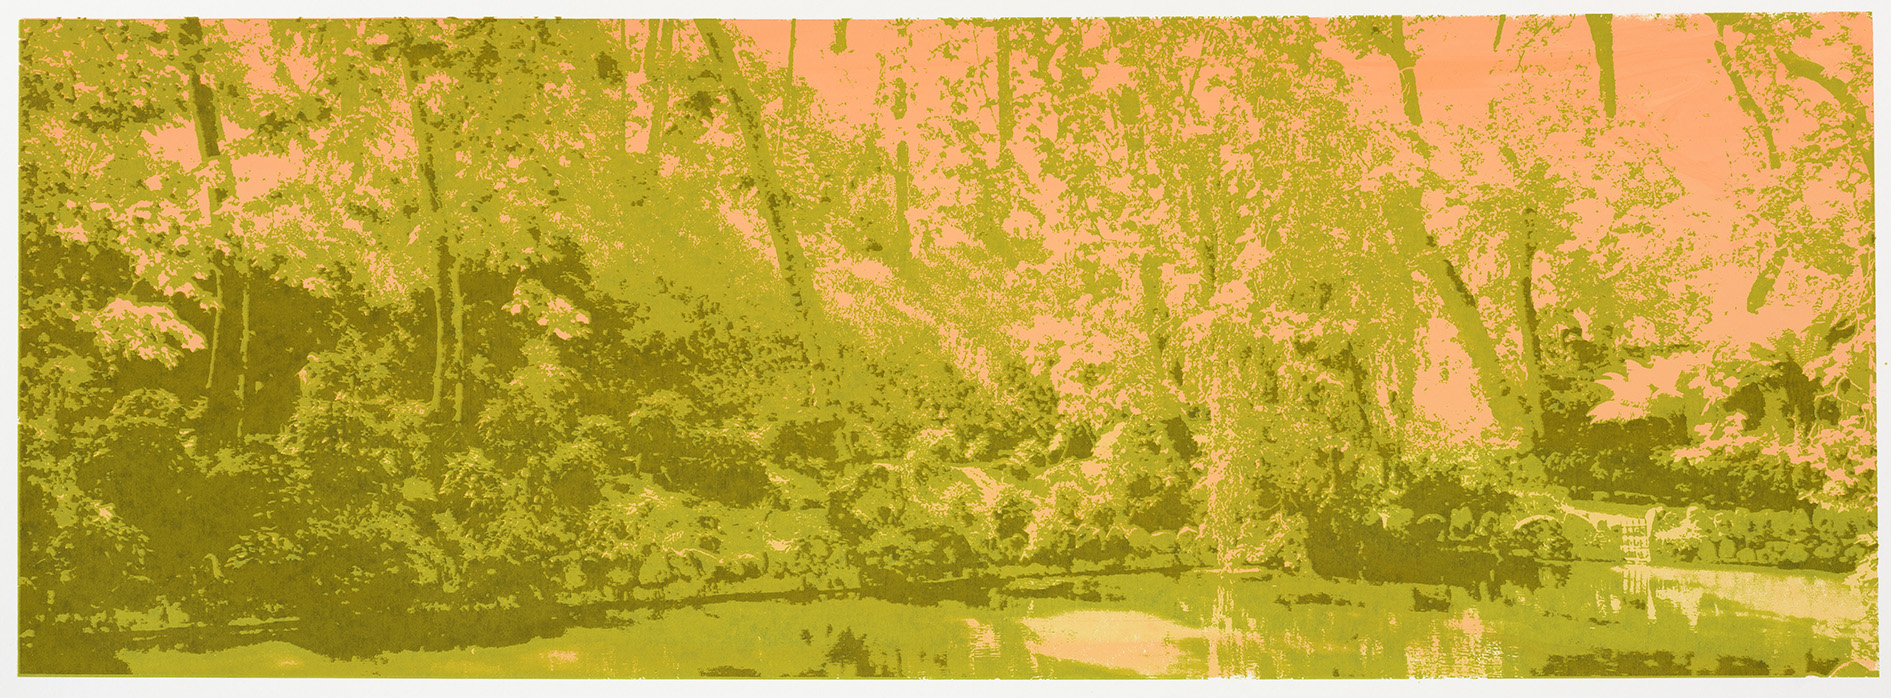 "Change of Seasons II (spring)", 35 x 100 cm. silkscreenprint (2015)